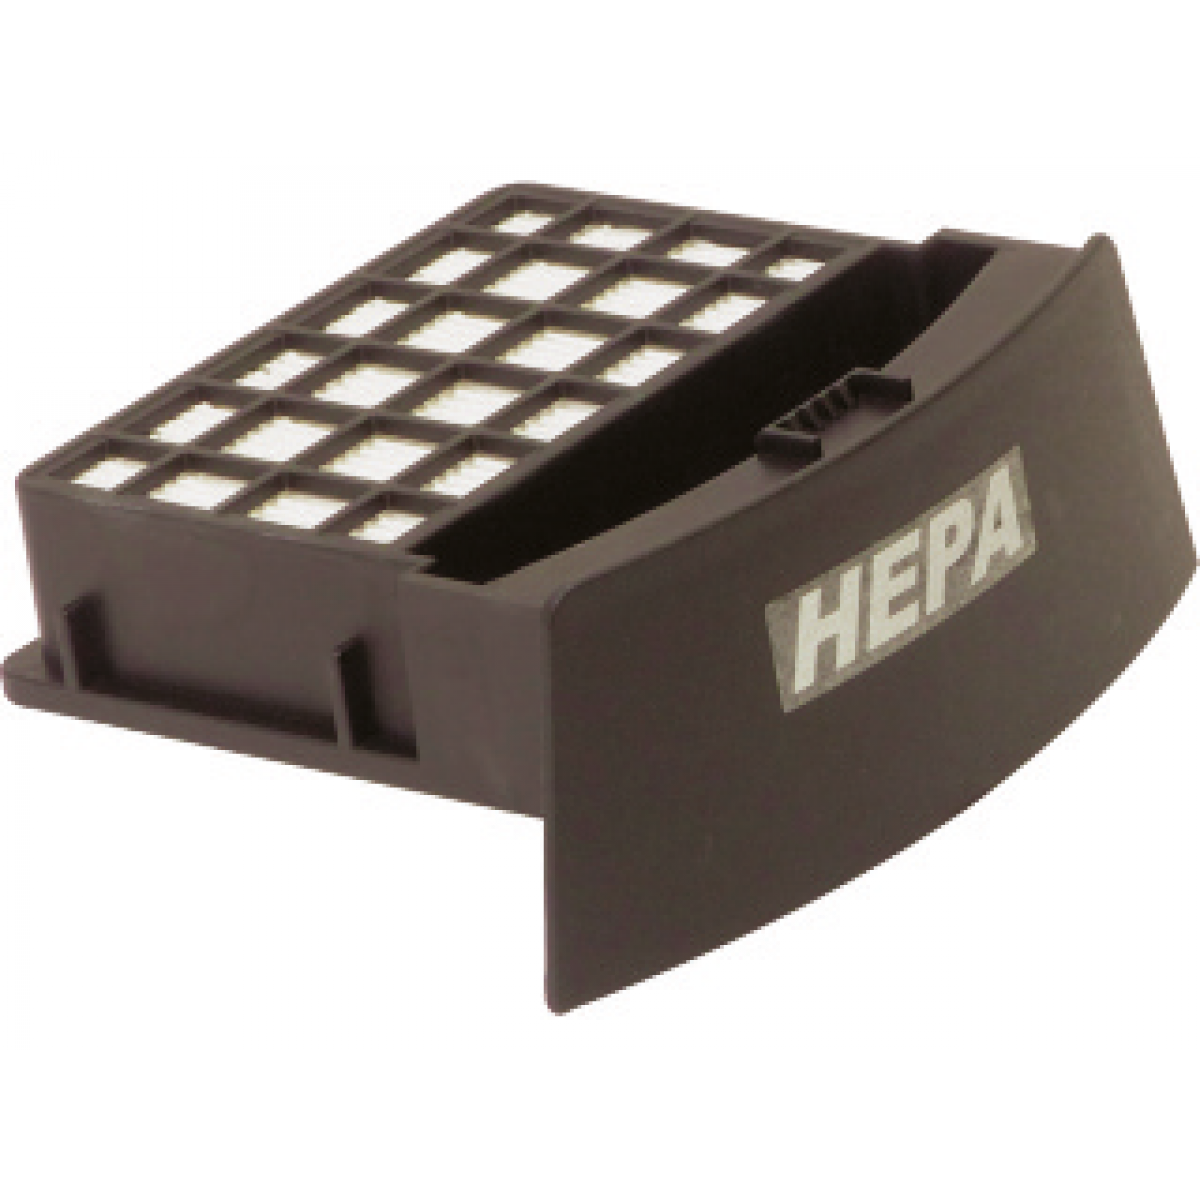 Product description:HEPA filter H13 